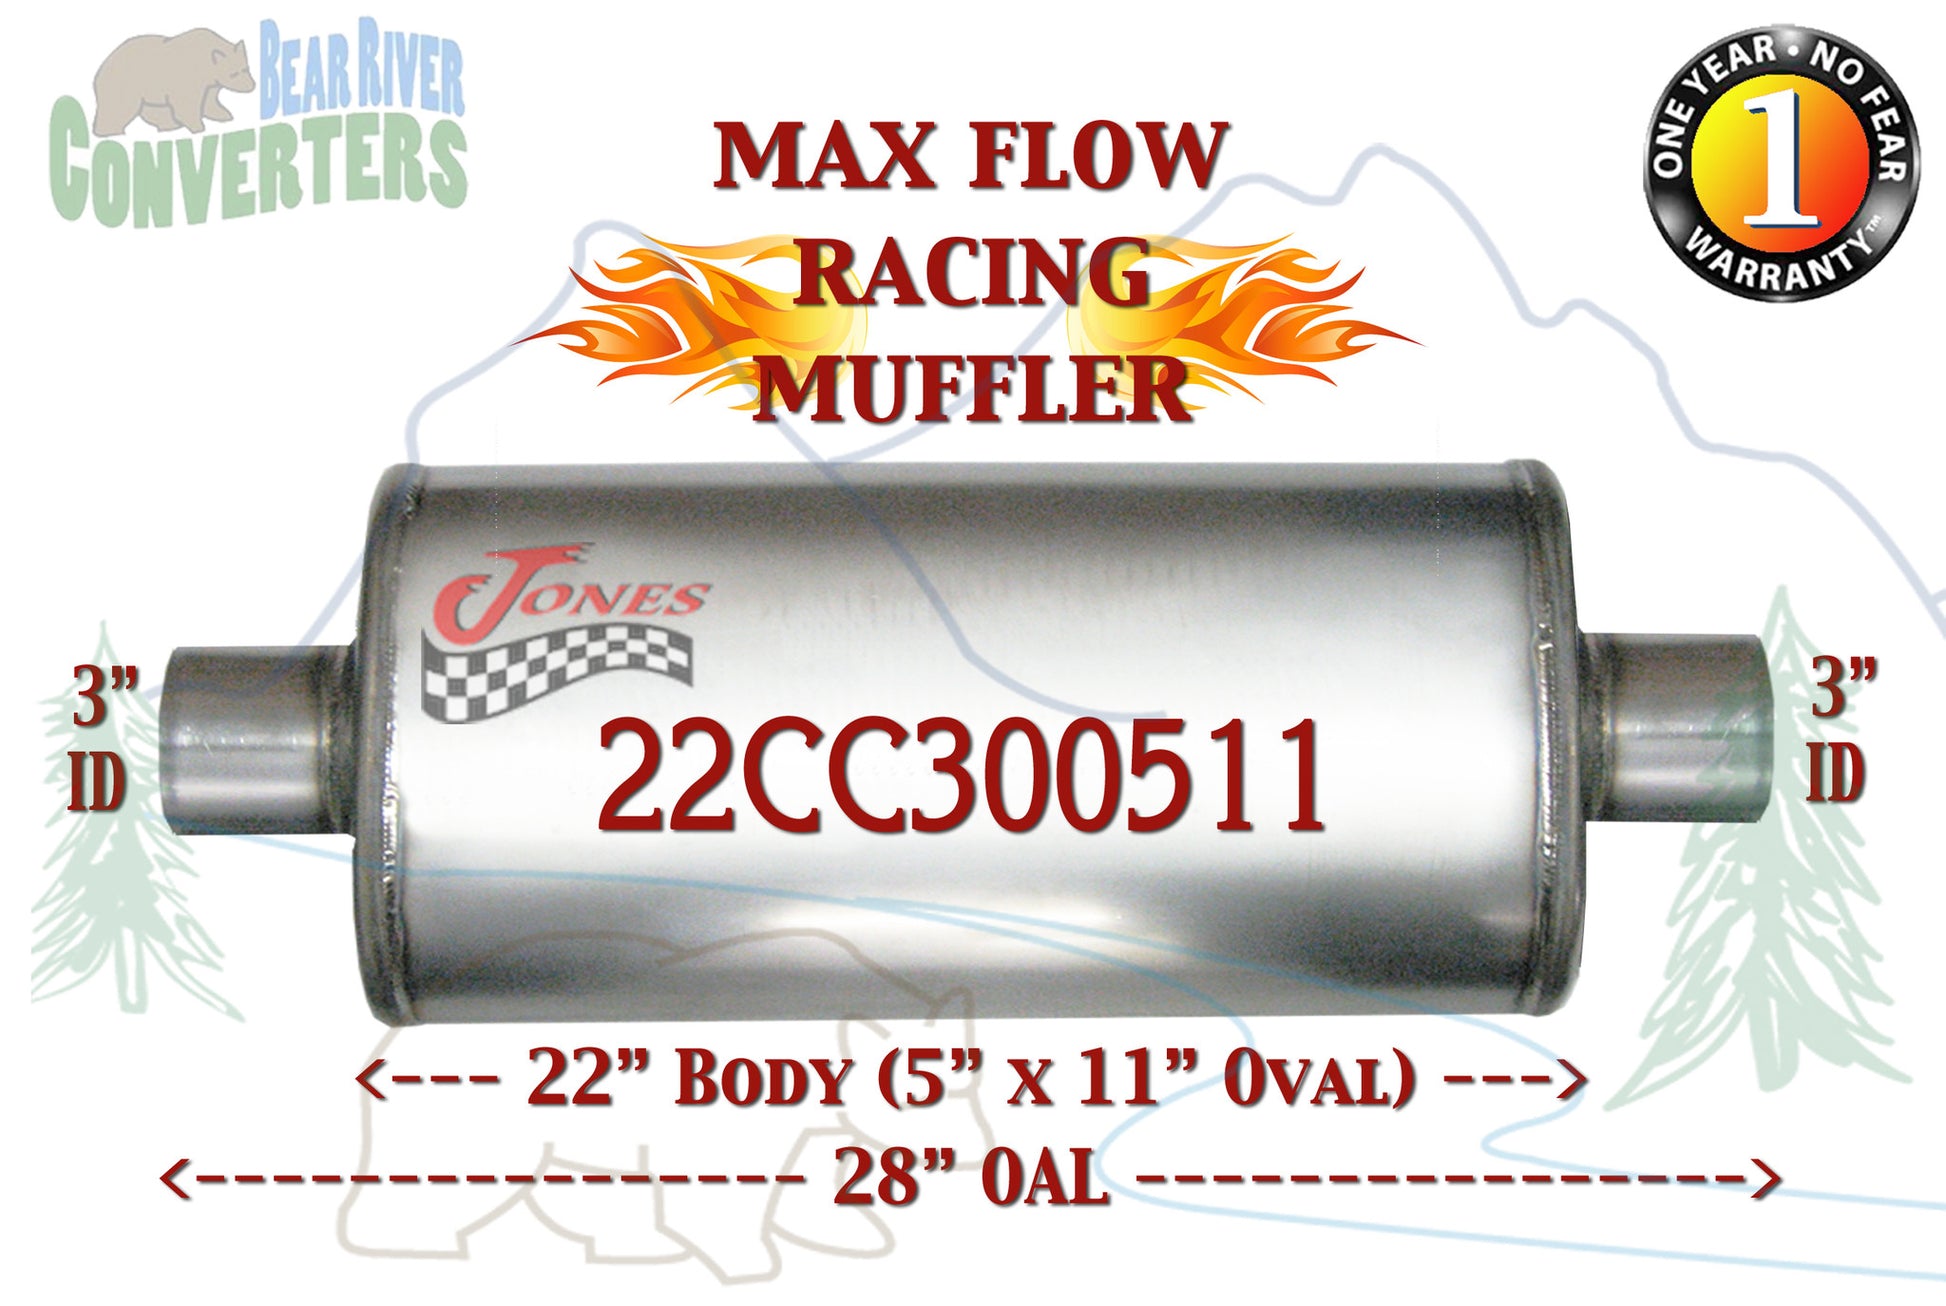 22CC300511 Jones MF2579 Max Flow Racing Muffler 22” Oval Body 3” Pipe Center/Center 28” OAL - Bear River Converters